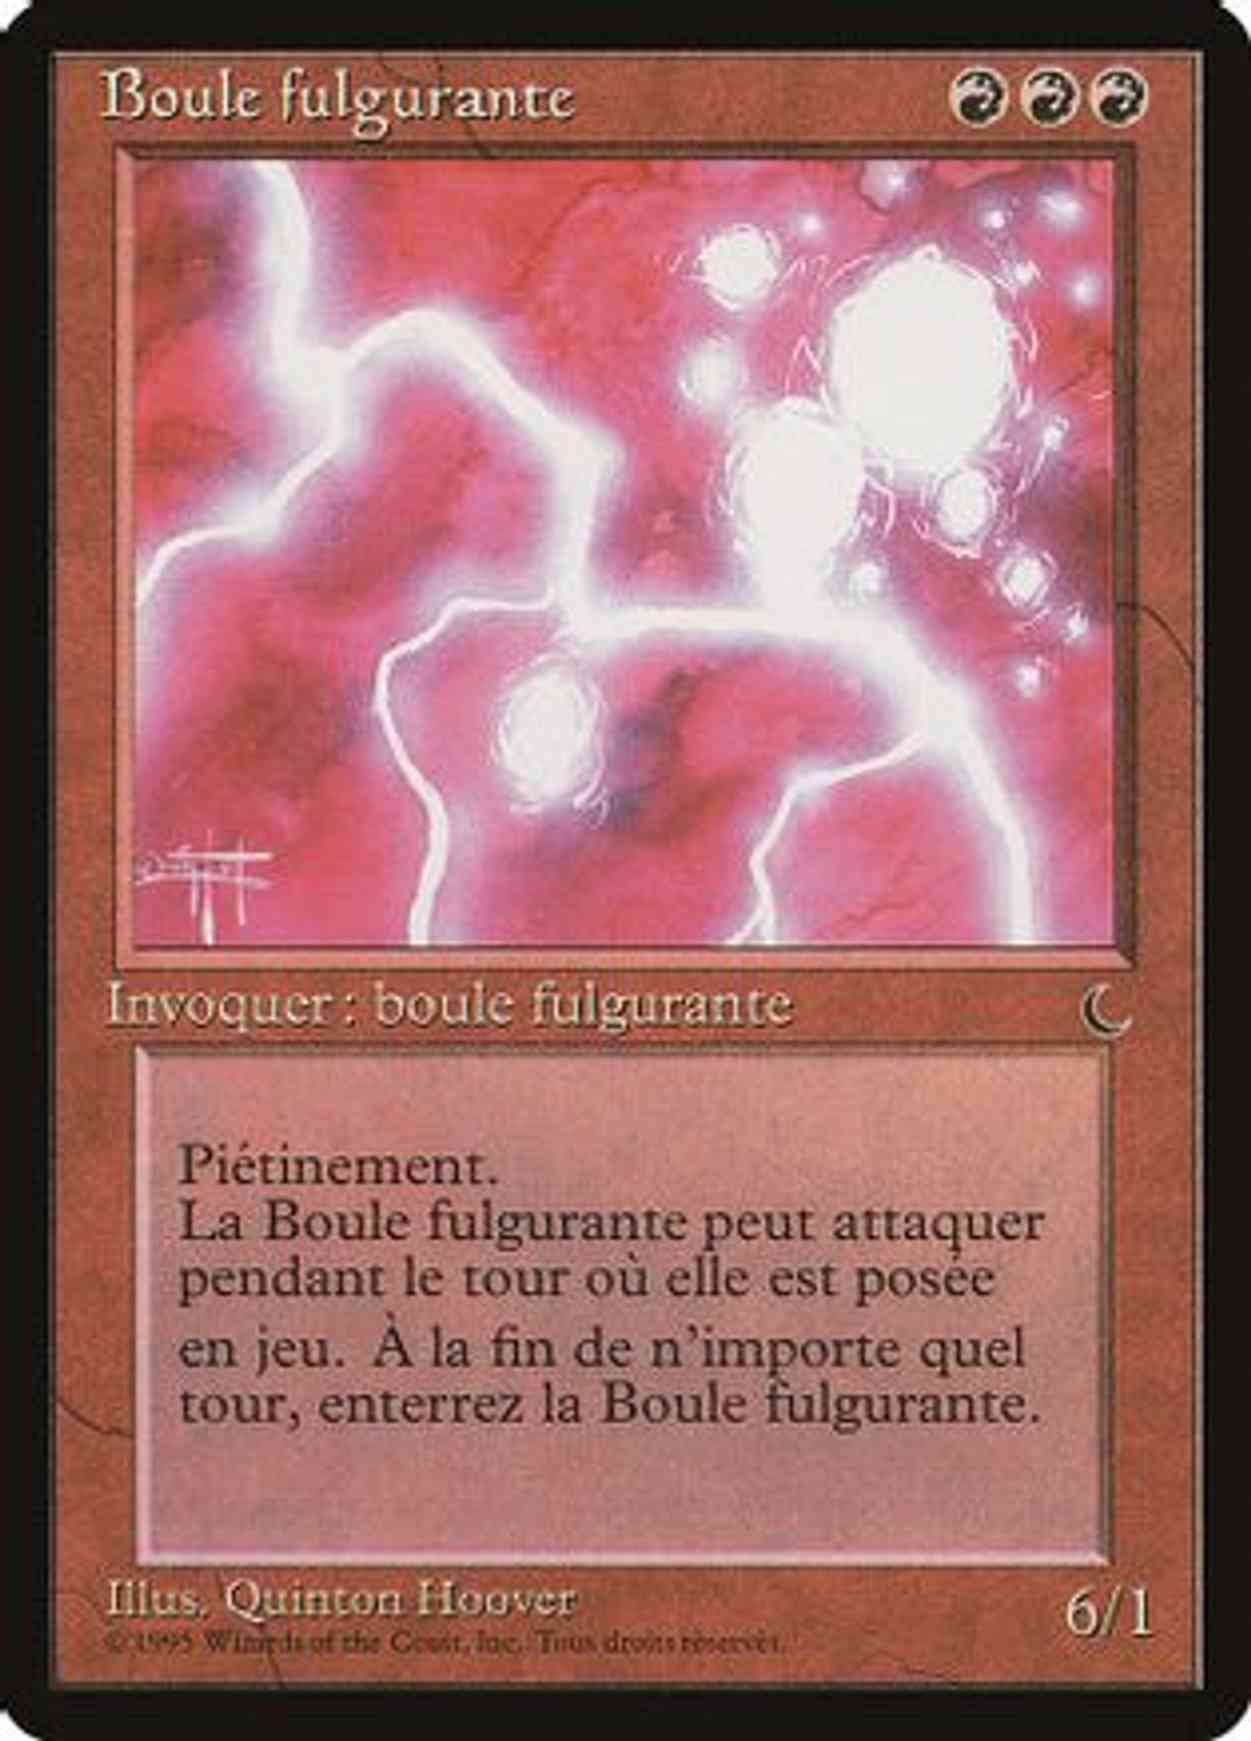 Ball Lightning (French) - "Boule fulgurante" magic card front